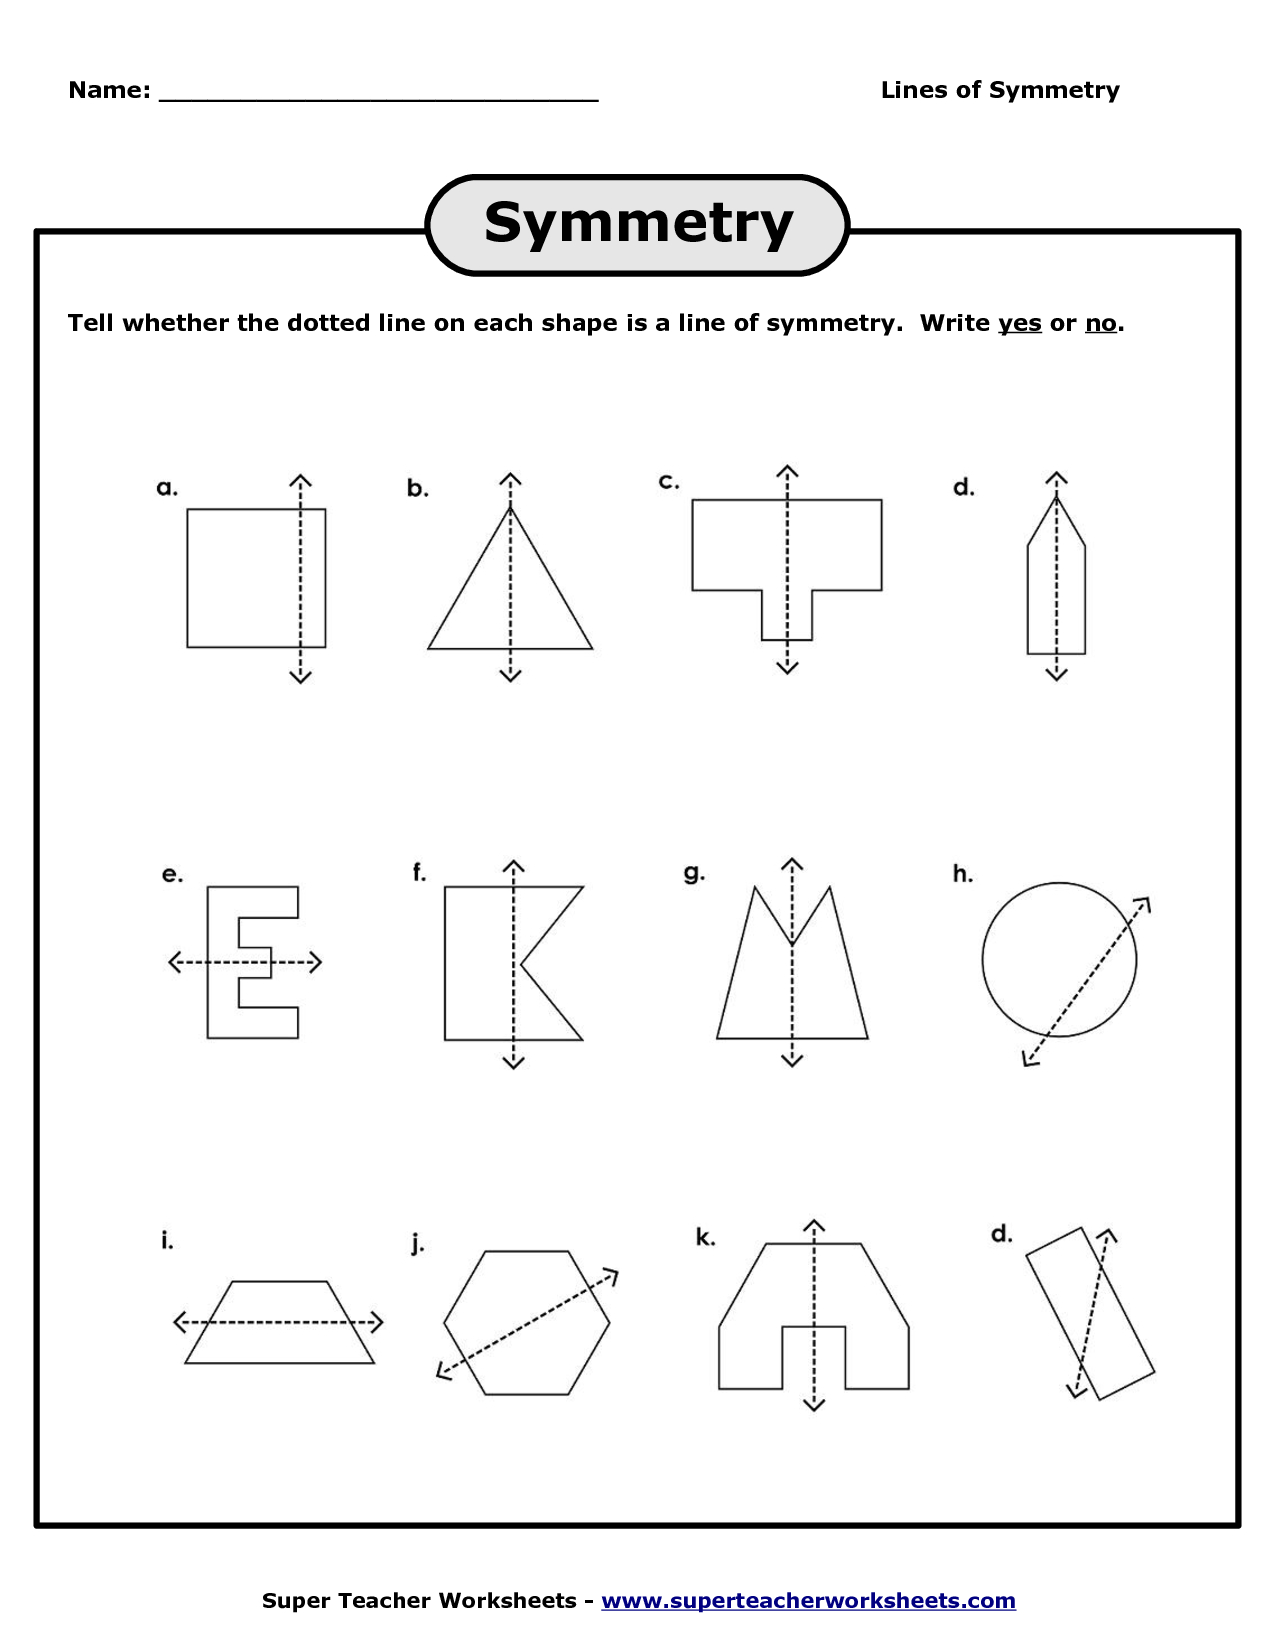 Symmetry Worksheets For High School Math  Razhayesheitanparastan As Well As Symmetry Worksheets For High School